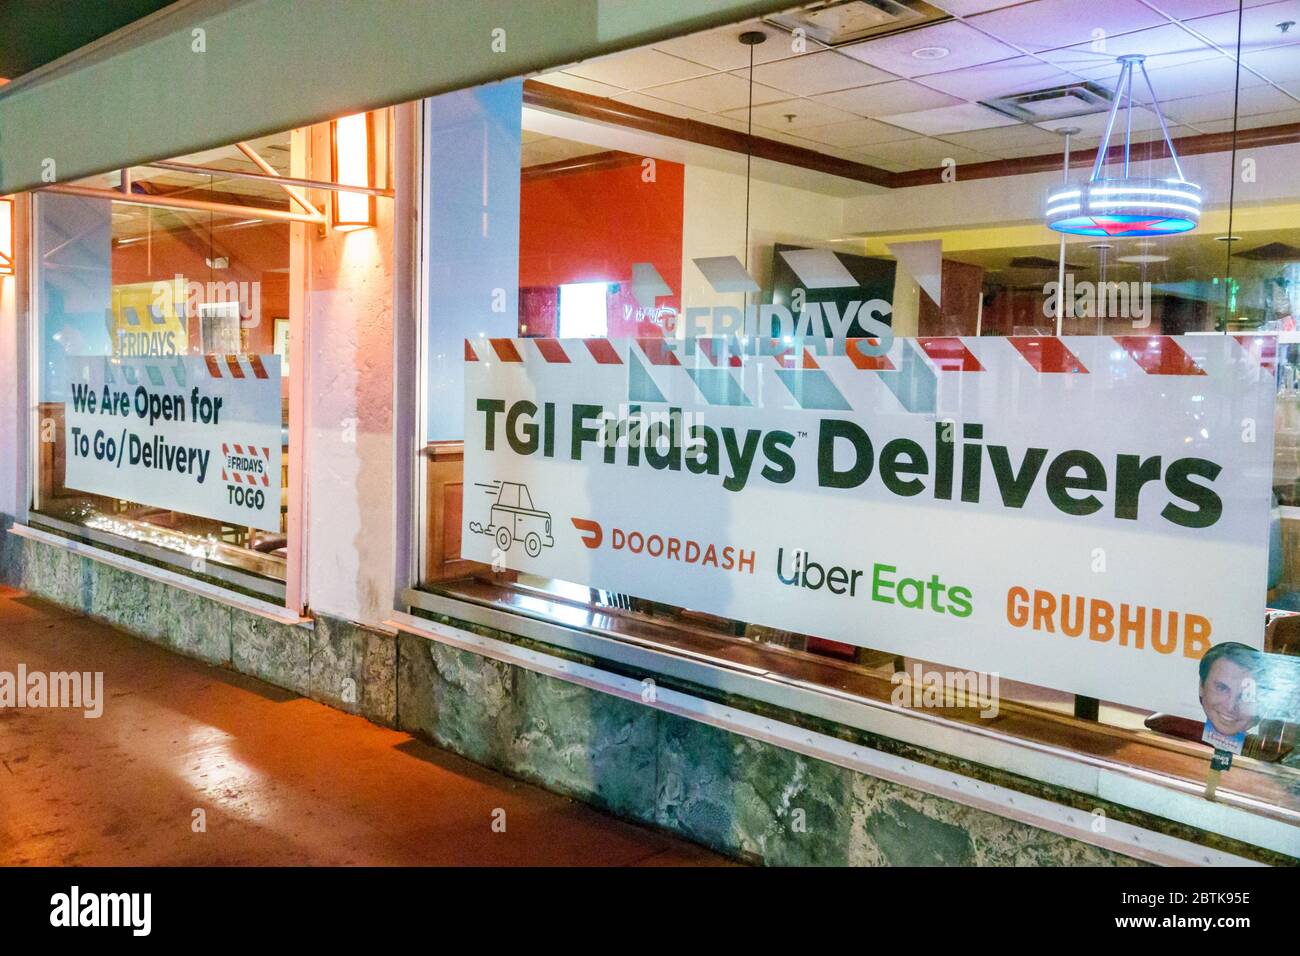 Miami Beach Florida,TGI Fridays, restaurant,takeout take-out delivery delivers to go sign,Doordash Uber Eats Grubhub,Covid-19 coronavirus pandemic cri Stock Photo